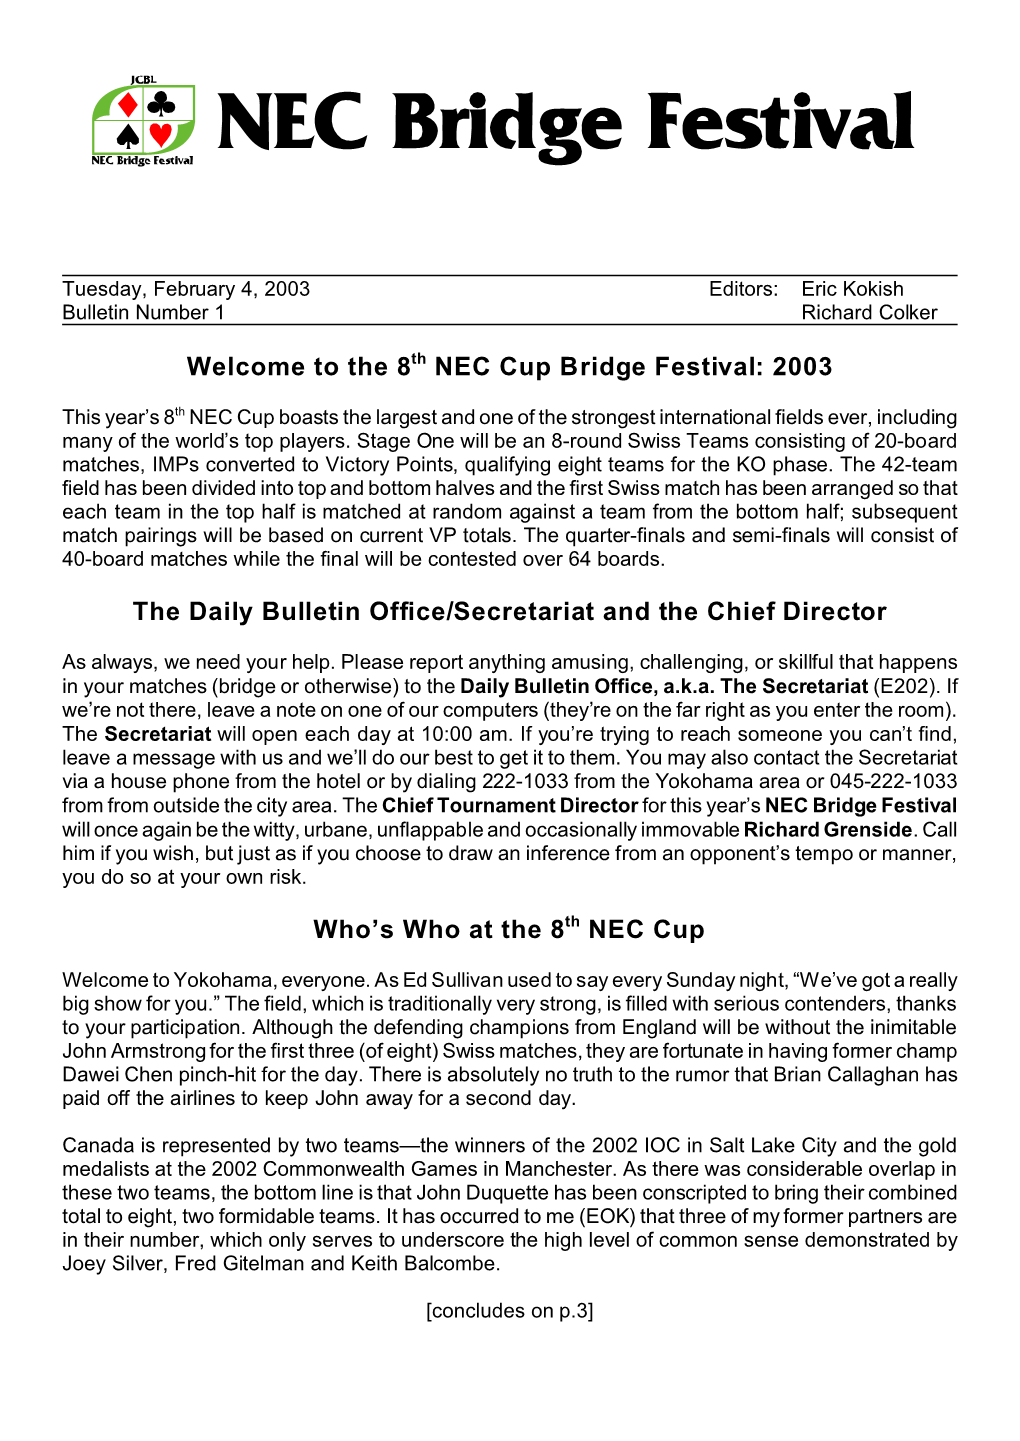 The 8Th NEC Cup Bridge Festival: 2003 the Daily Bulletin